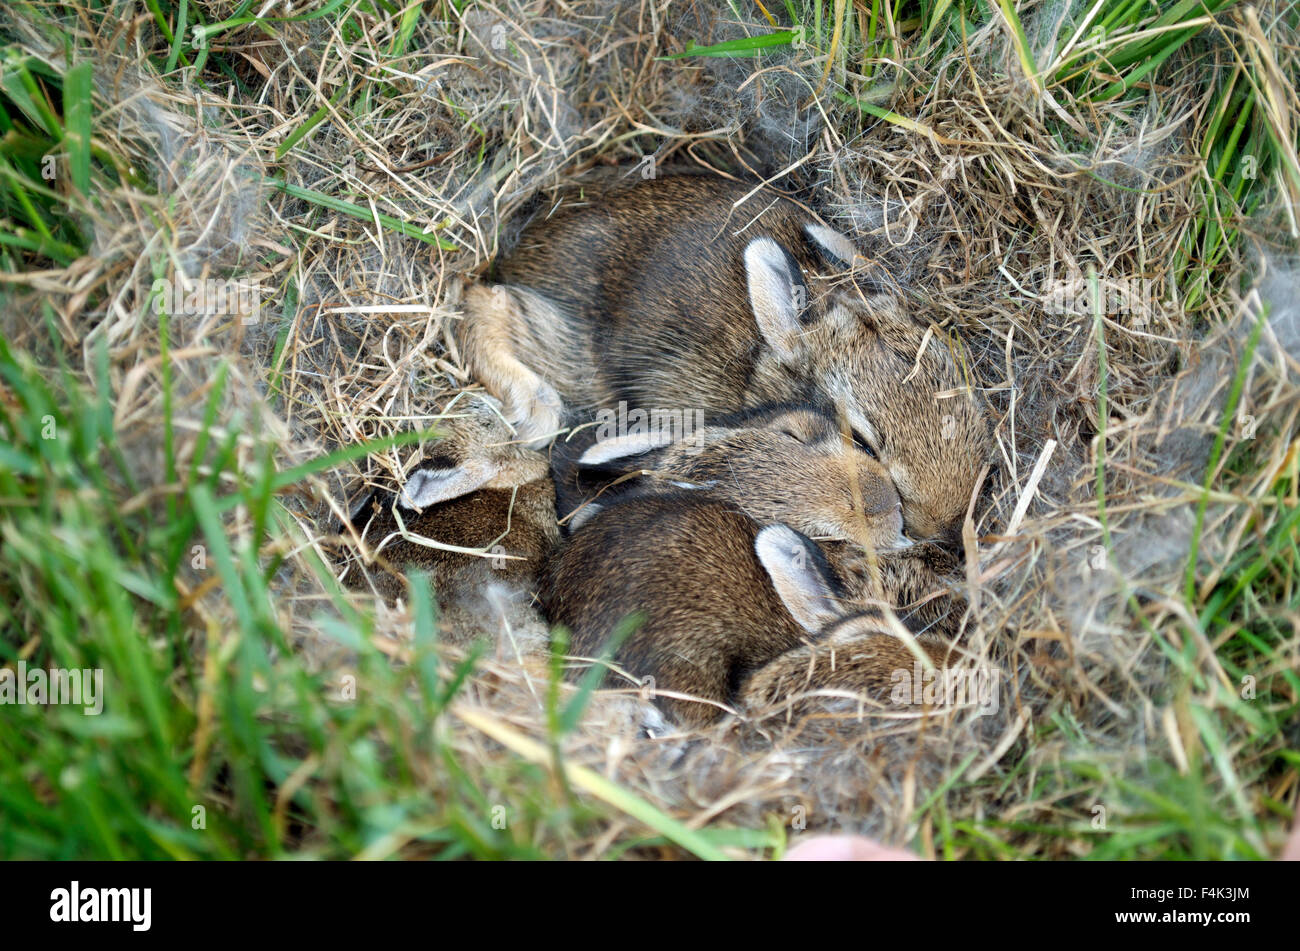 Wild Bunny Nest In The Grass Stock Photo